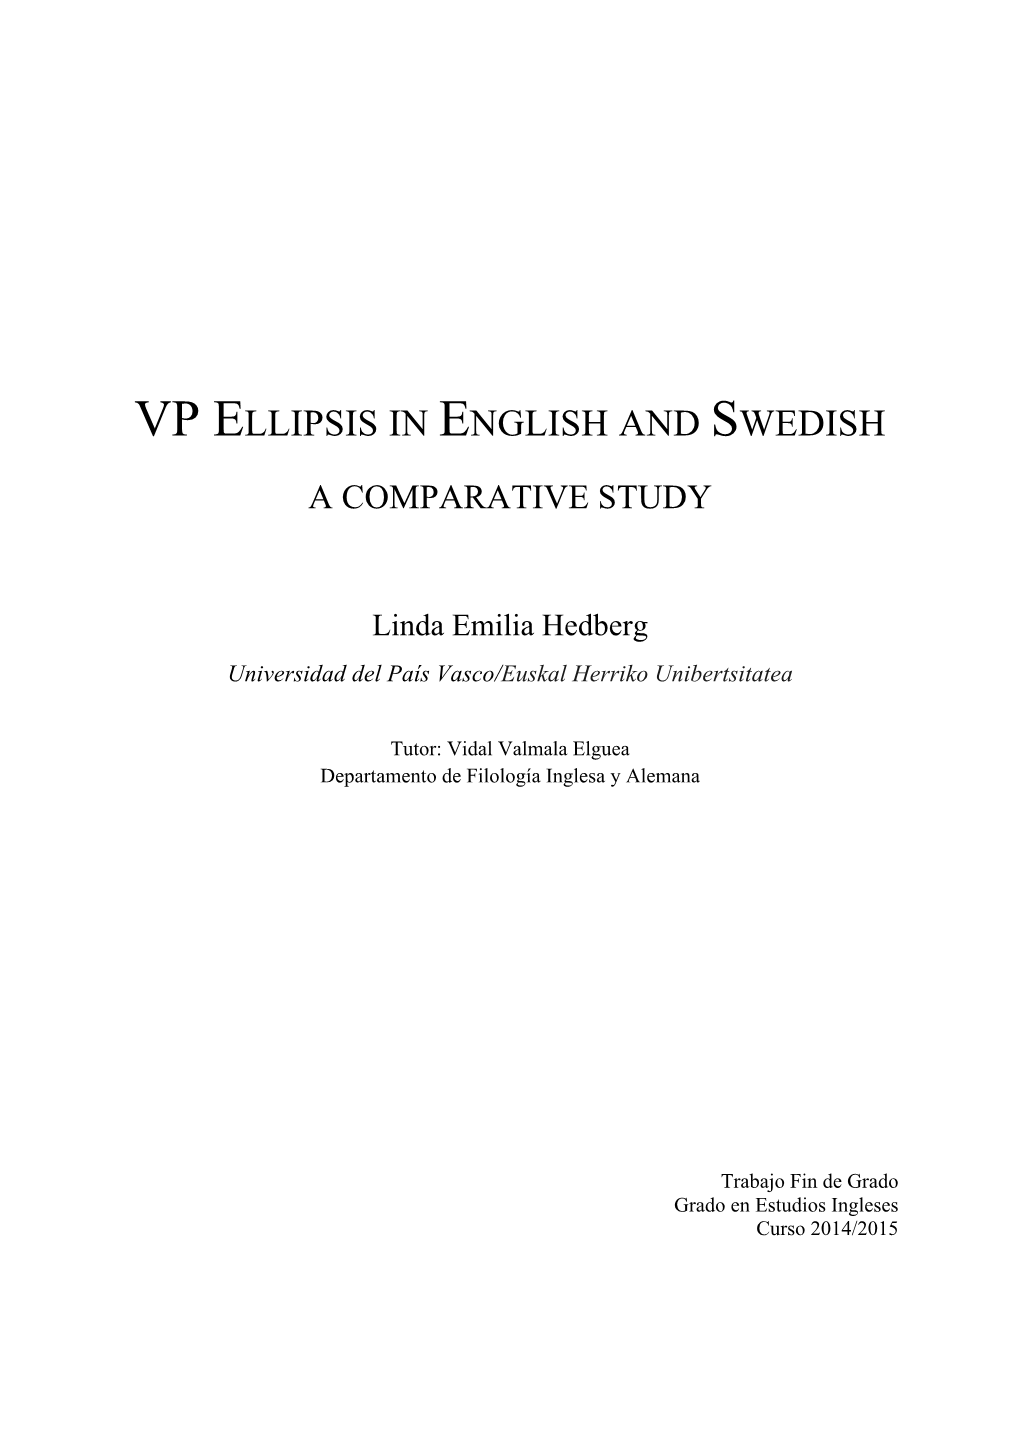 Vp Ellipsis in English and Swedish